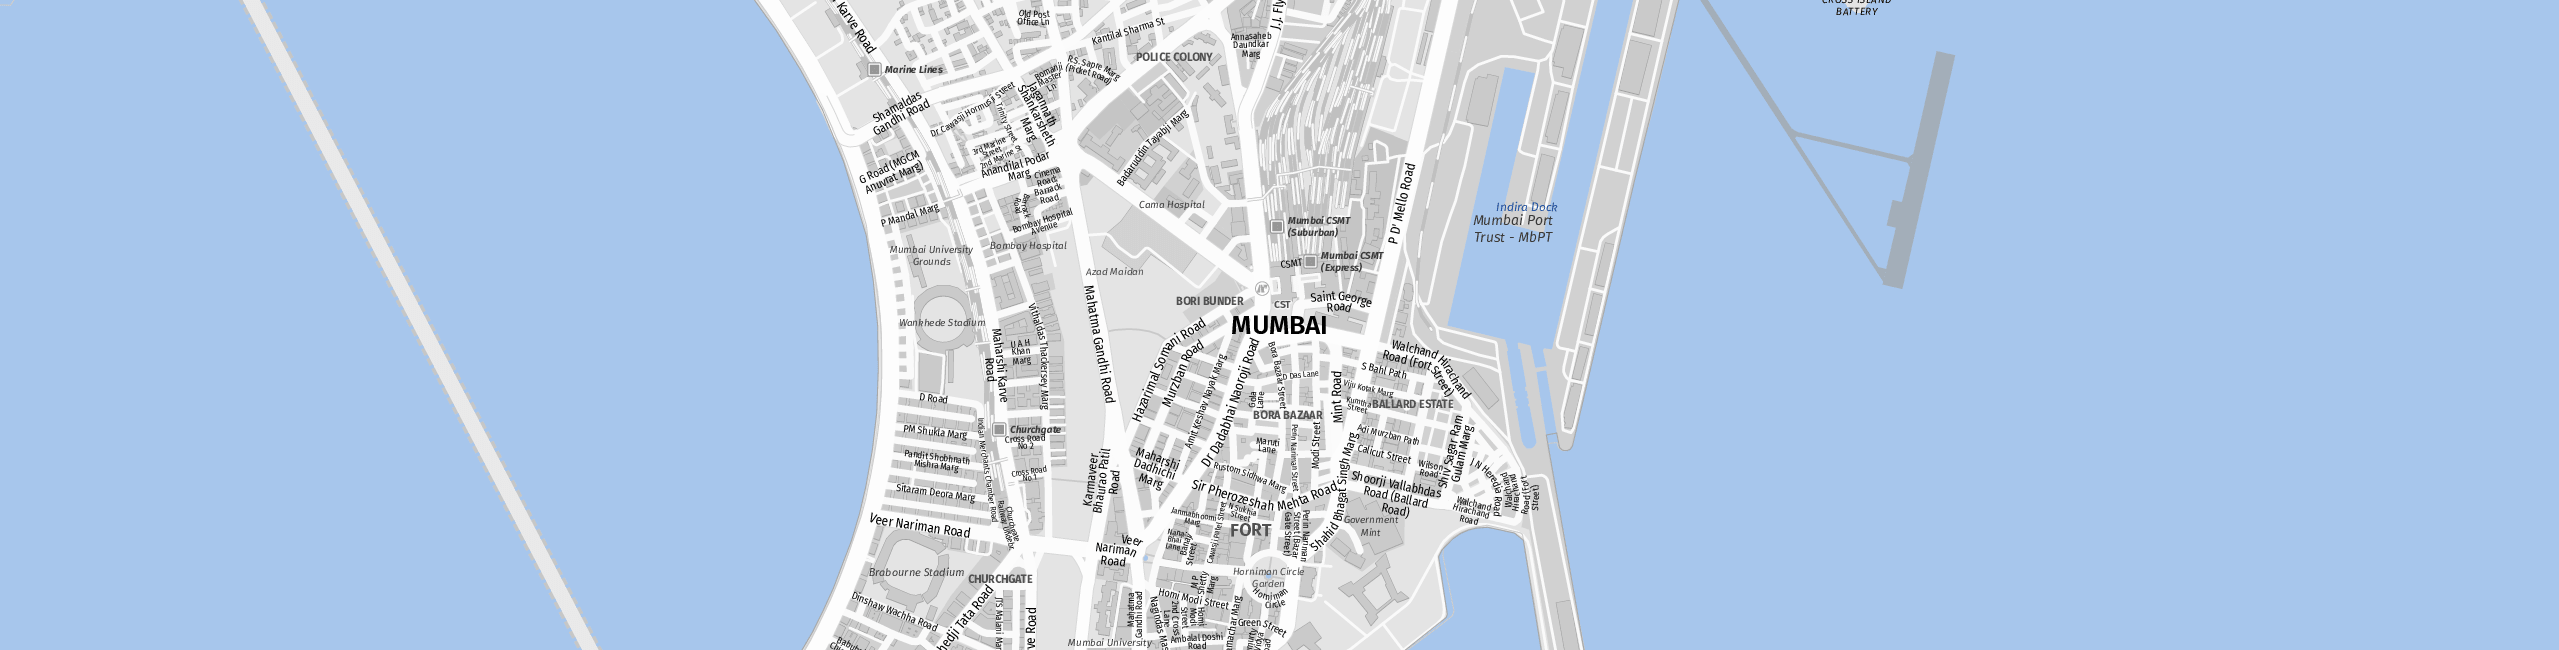 Stadtplan Mumbai zum Downloaden.